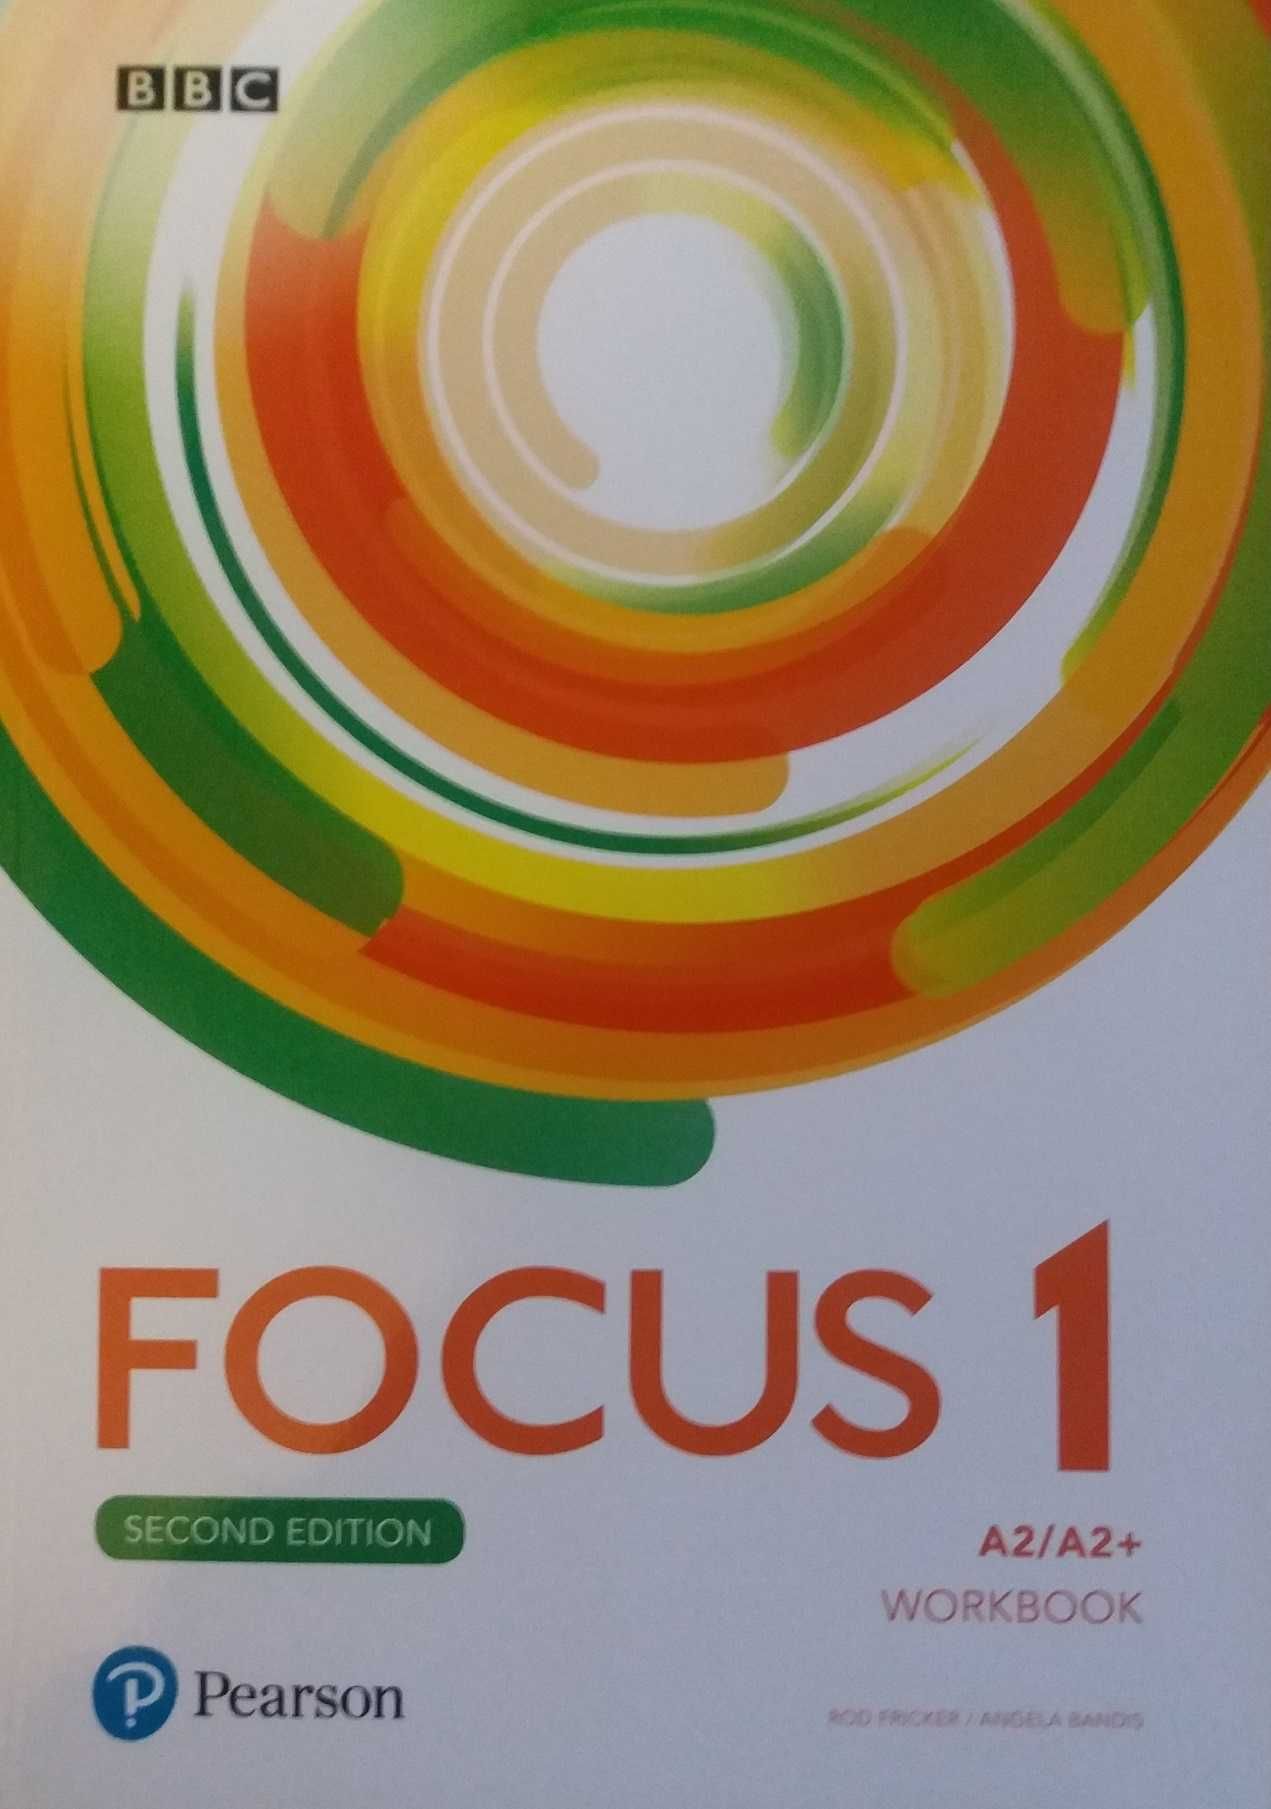 Focus 1 Workbook + Kompendium maturalne + kod.  Pearson